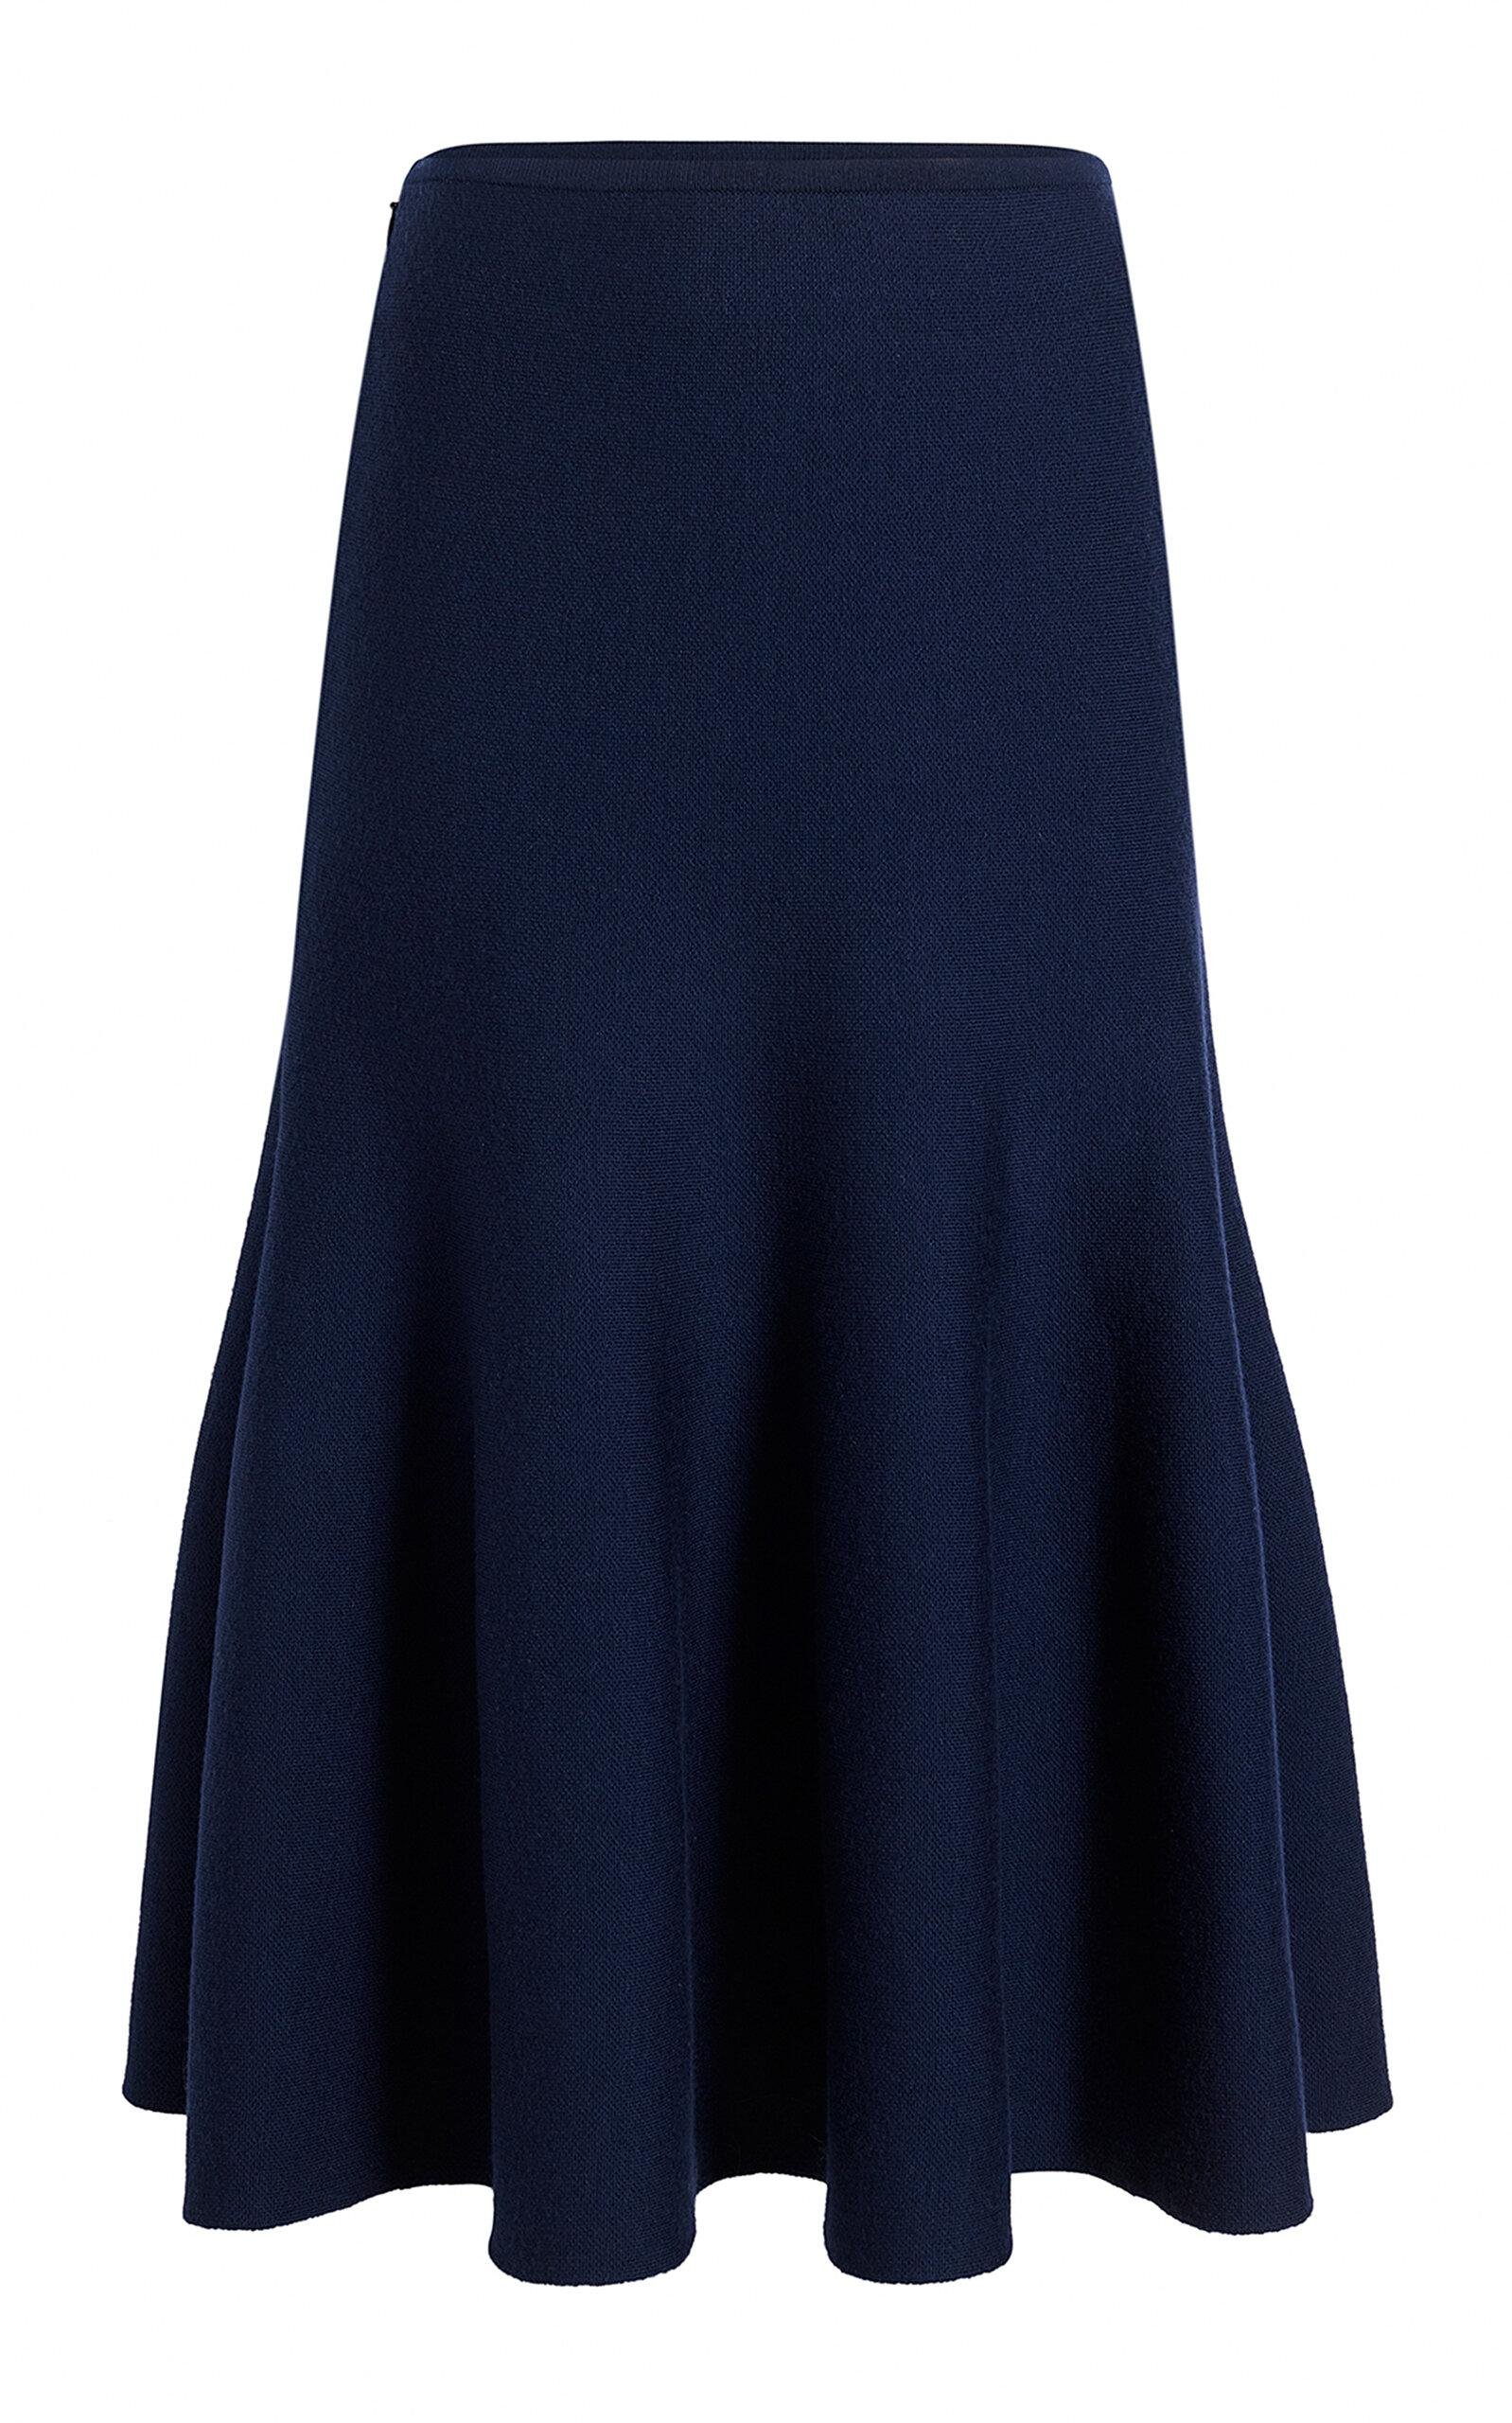 Khaite - Odil Flared Wool-Blend Midi Skirt - Navy - XL - Only At Moda Operandi by KHAITE